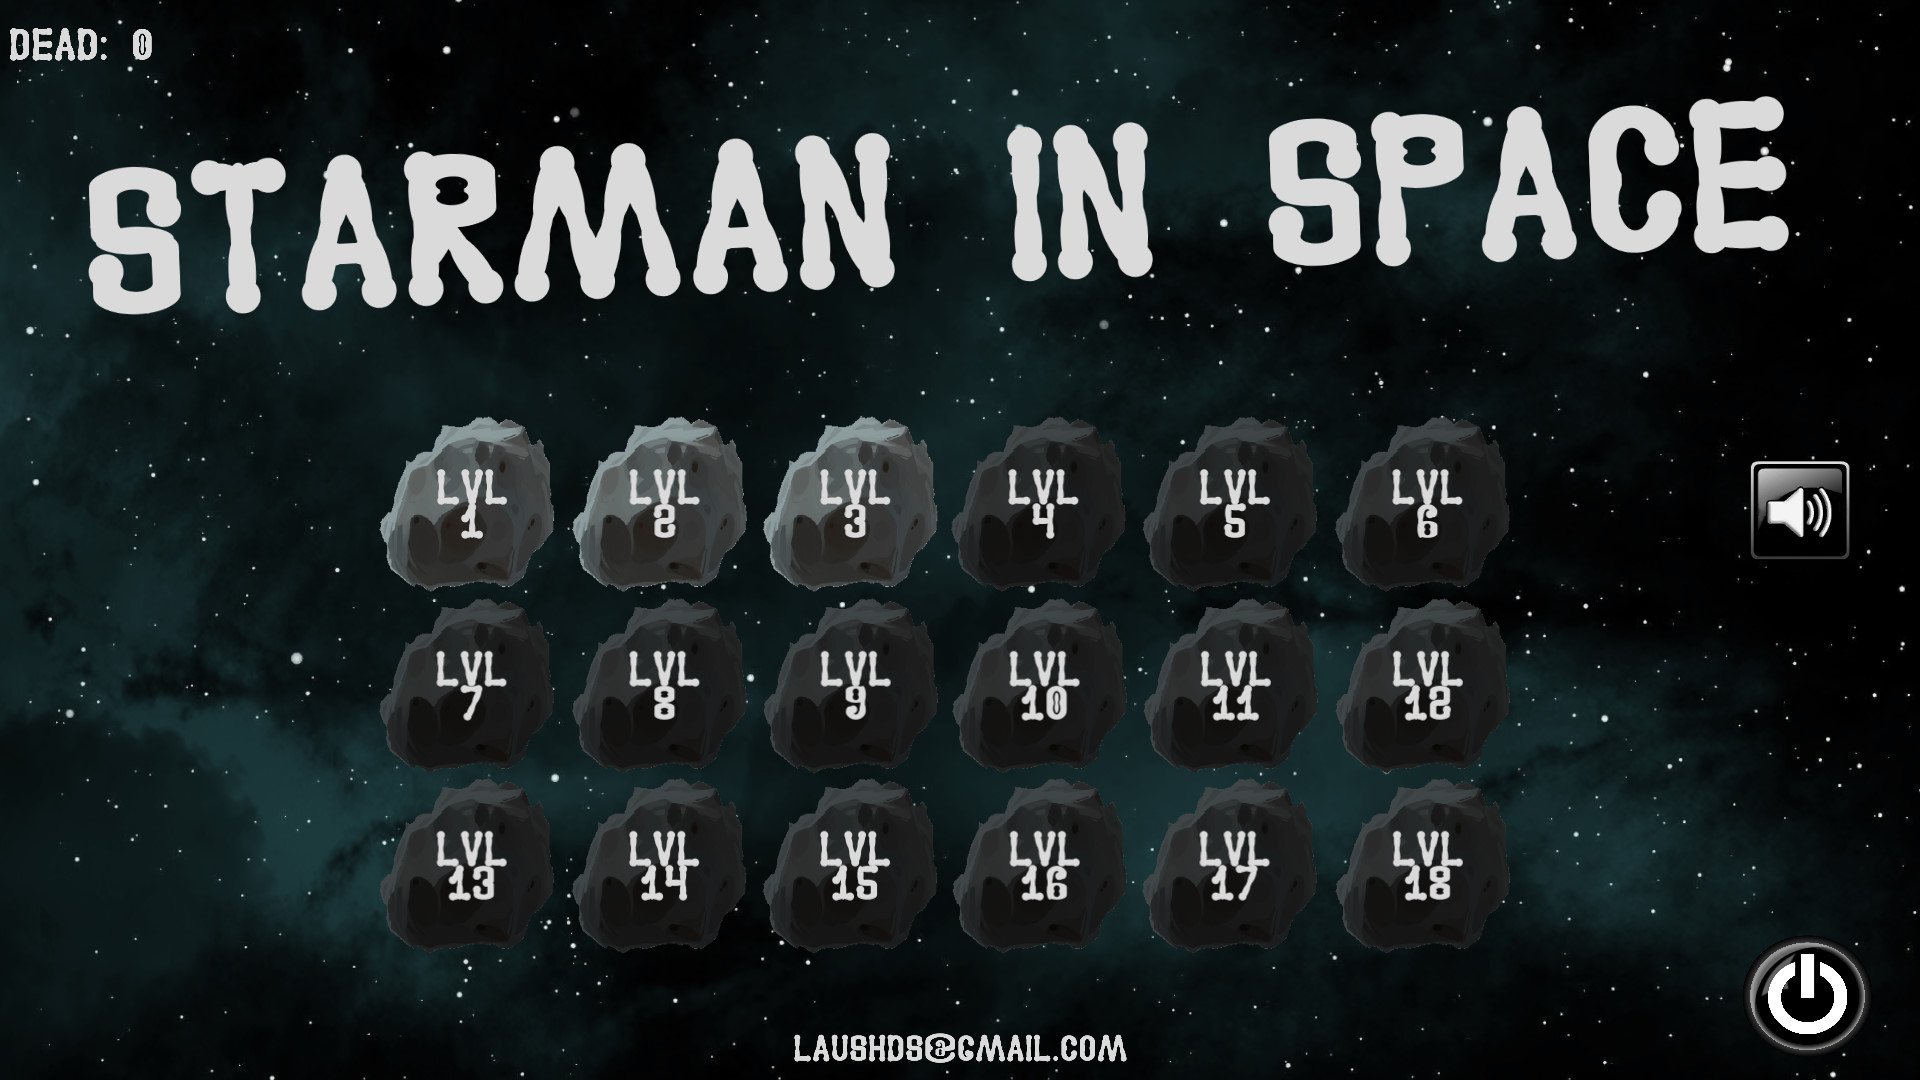 Starman in space 4